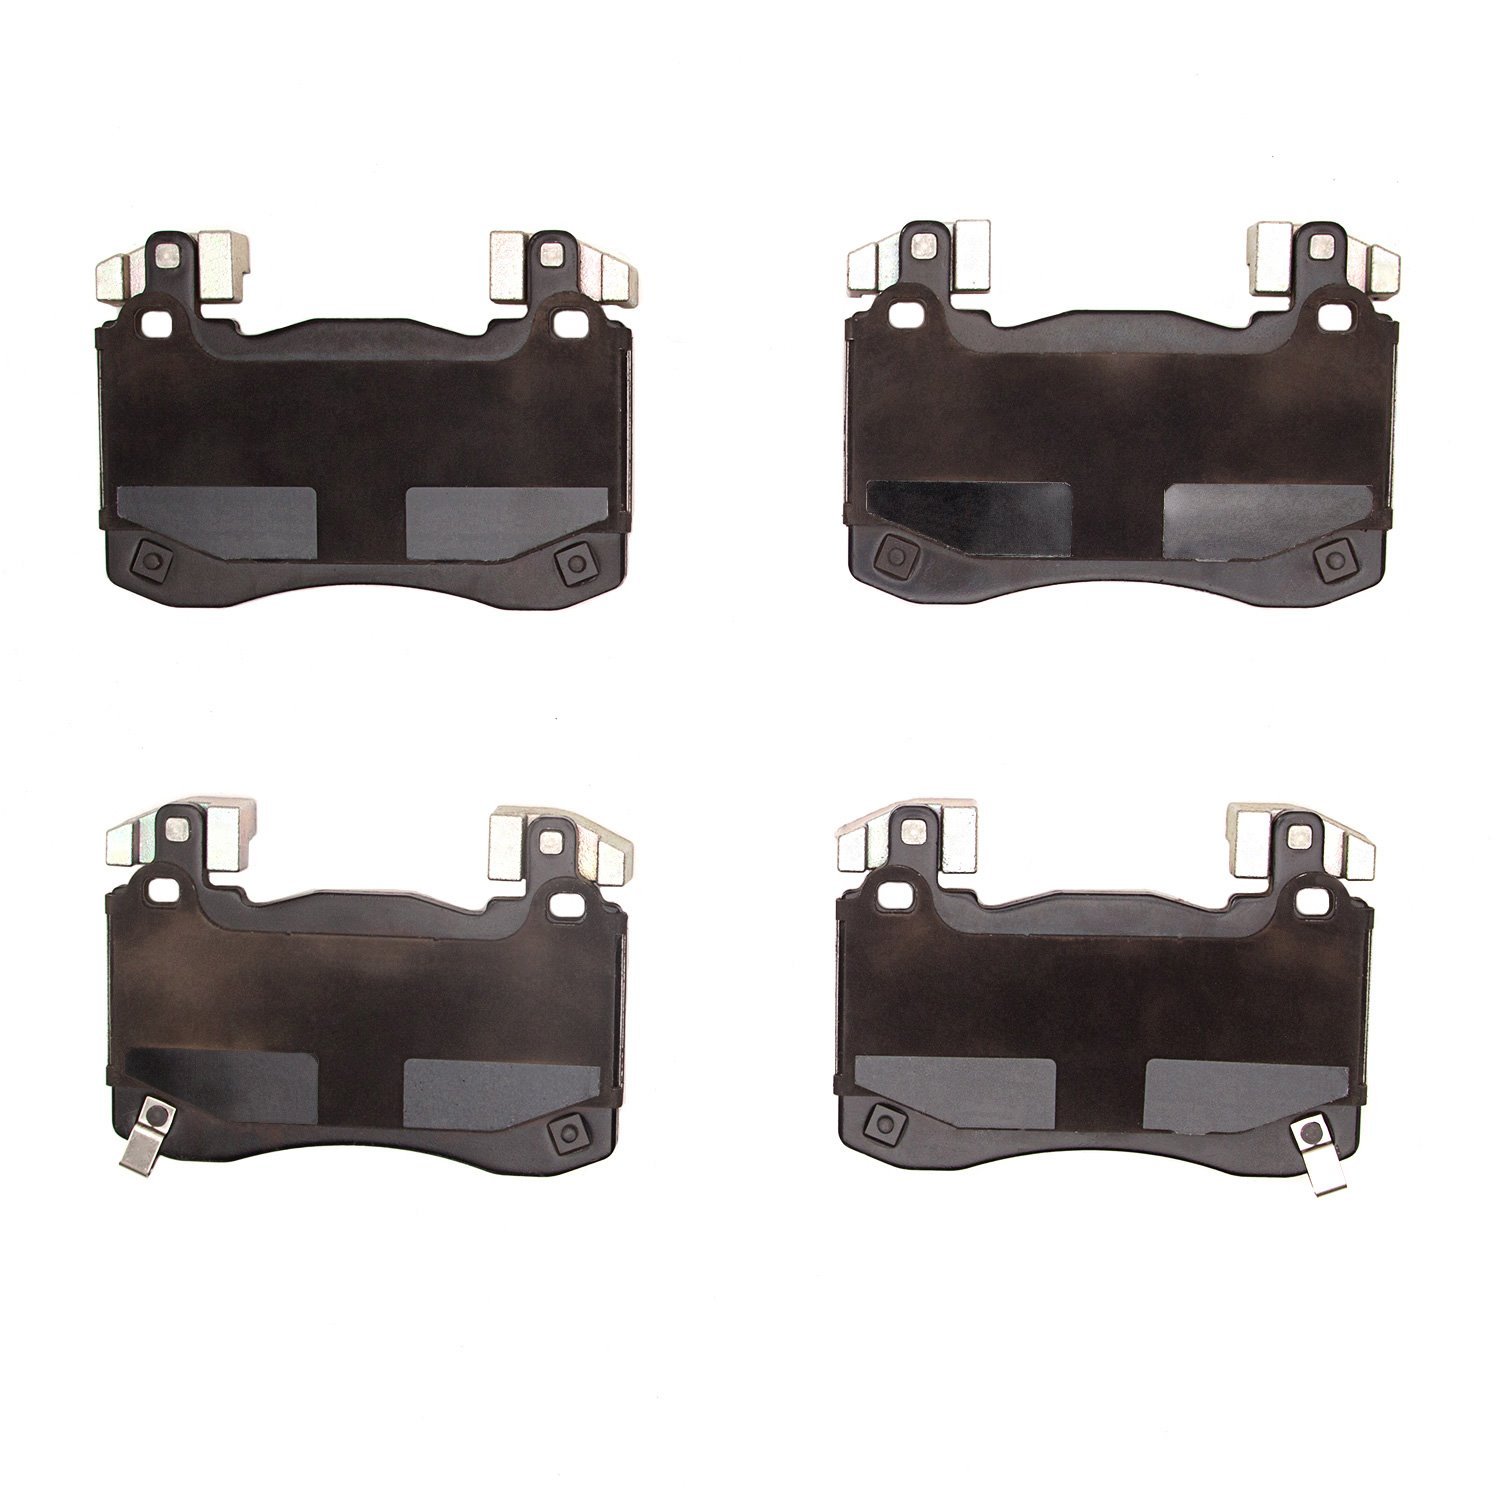 1551-2145-00 5000 Advanced Ceramic Brake Pads, Fits Select Kia/Hyundai/Genesis, Position: Front